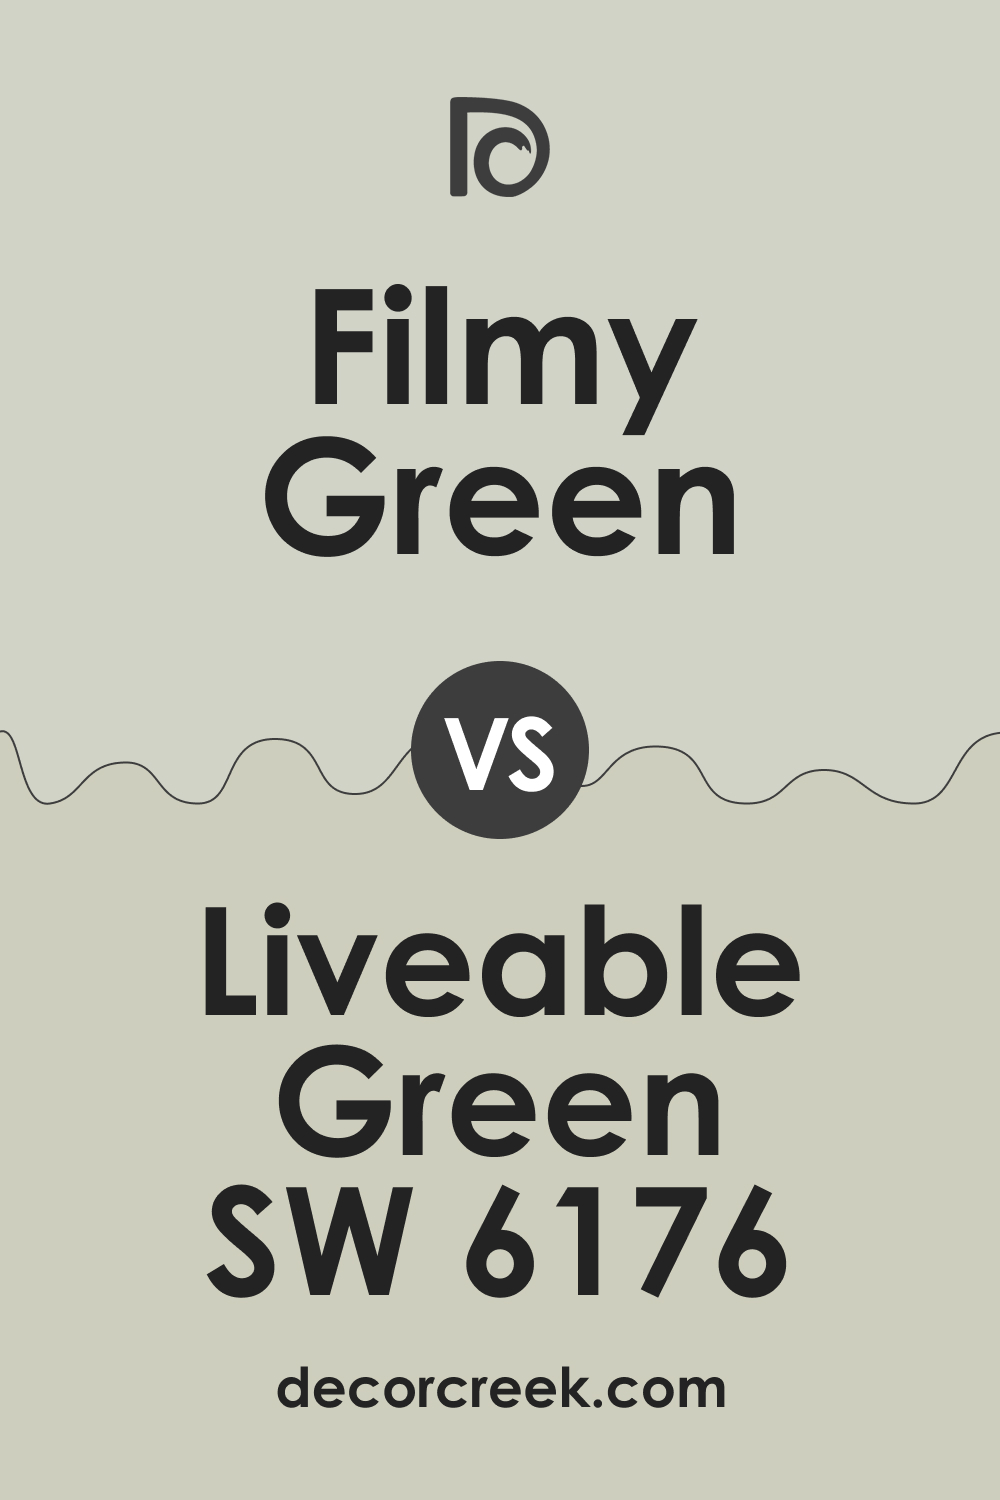 Filmy Green vs Liveable Green